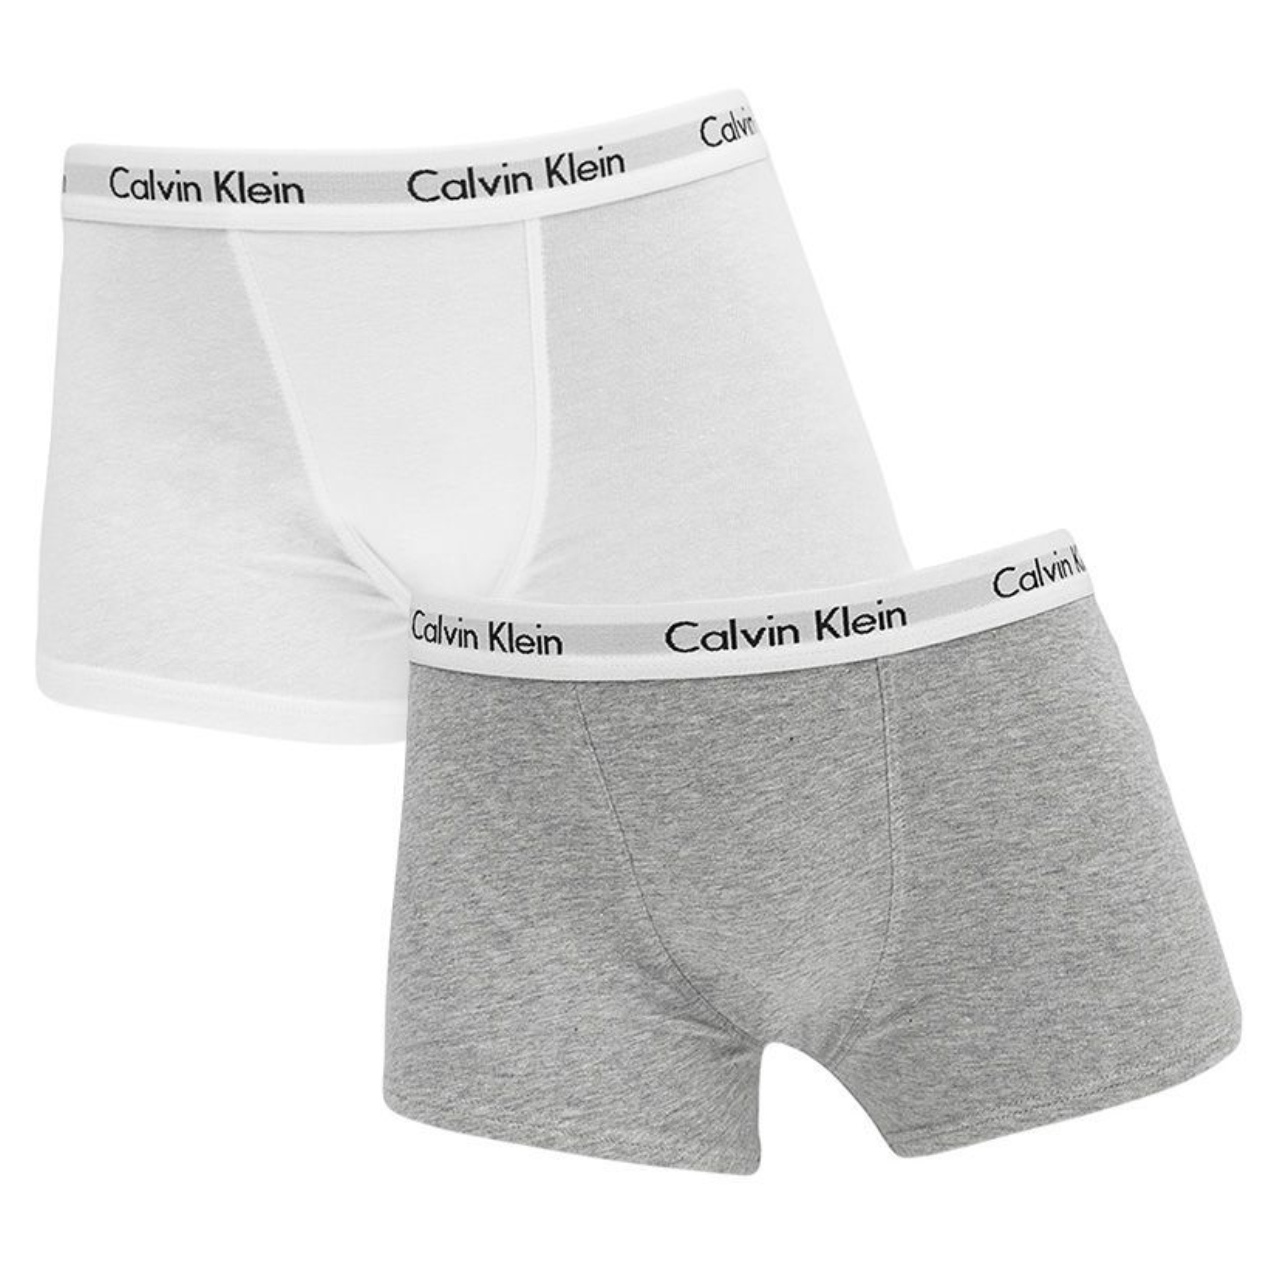 Stal nikkel In zicht Calvin Klein Boys B70B792000926 Grijs - Ondergoed & Nachtkleding - Jongens  - Irma Mode